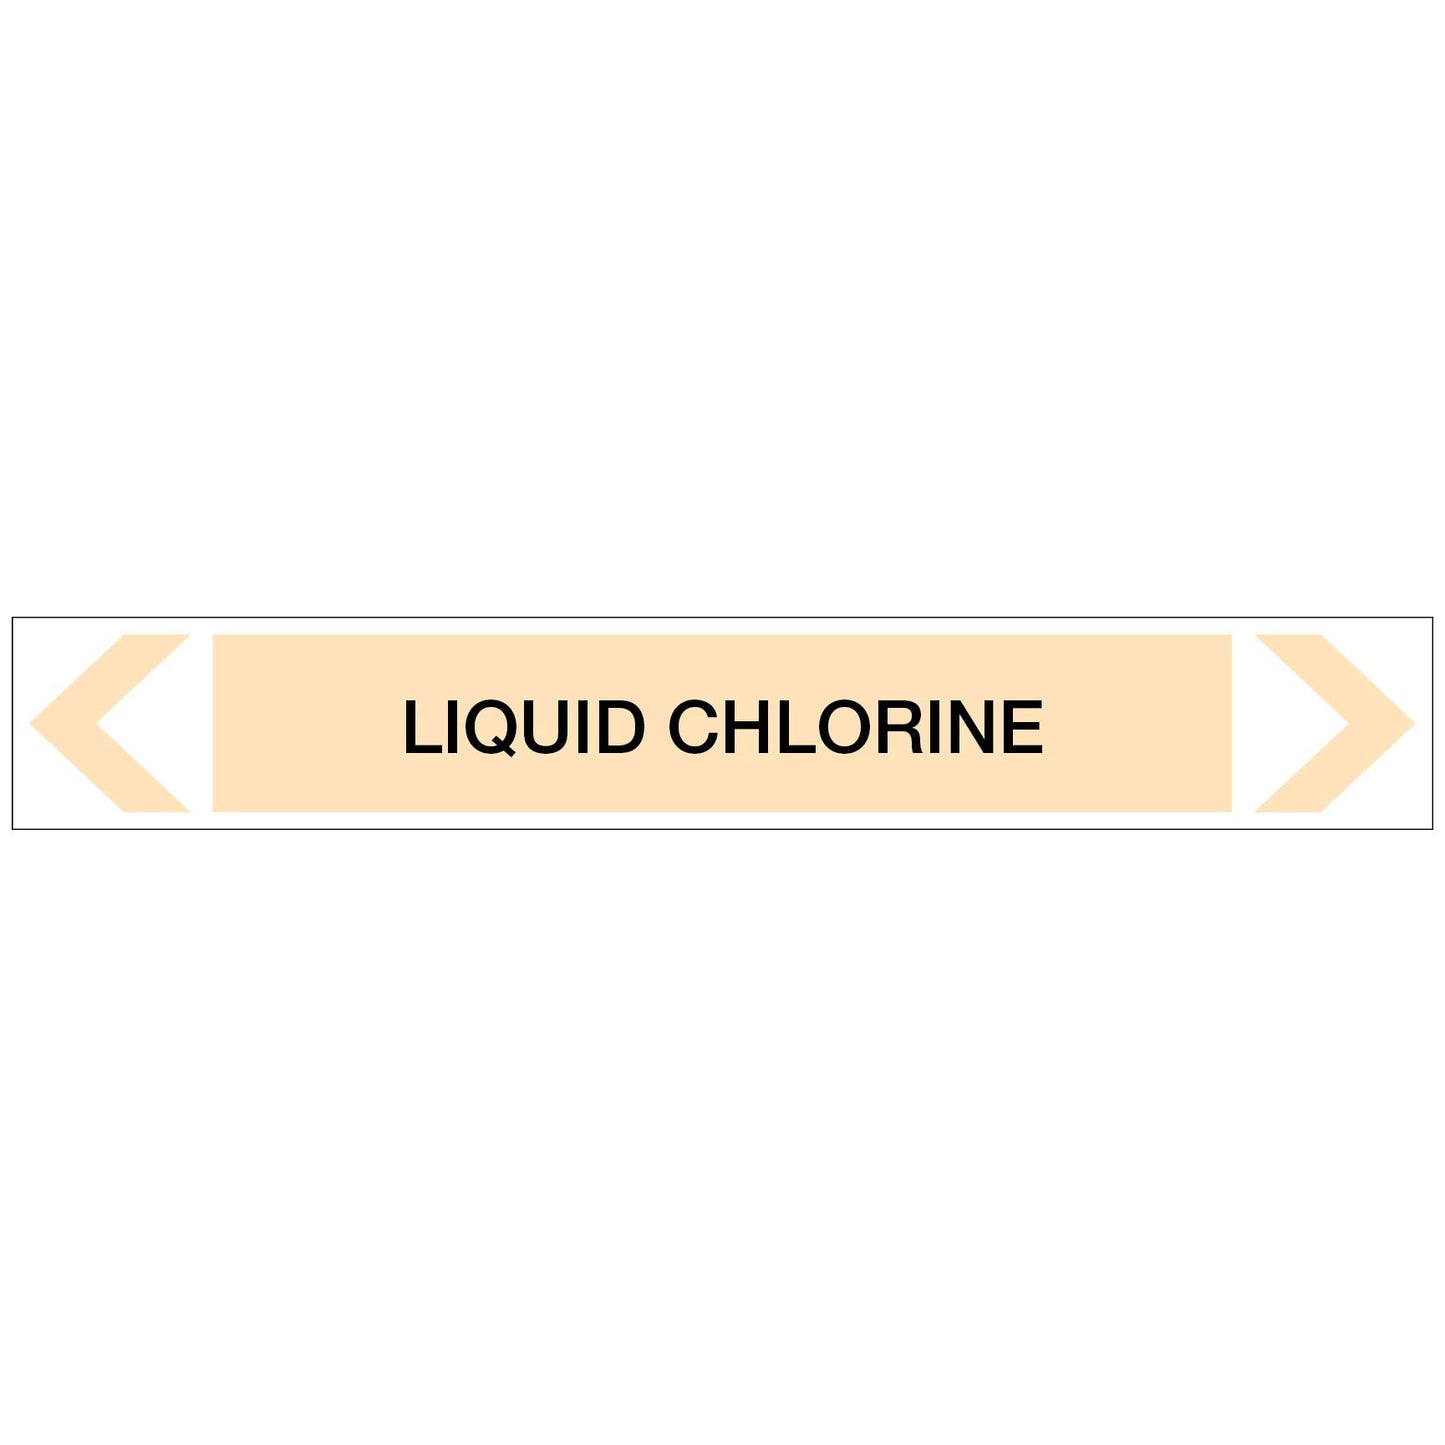 Gases - Liquid Chlorine - Pipe Marker Sticker